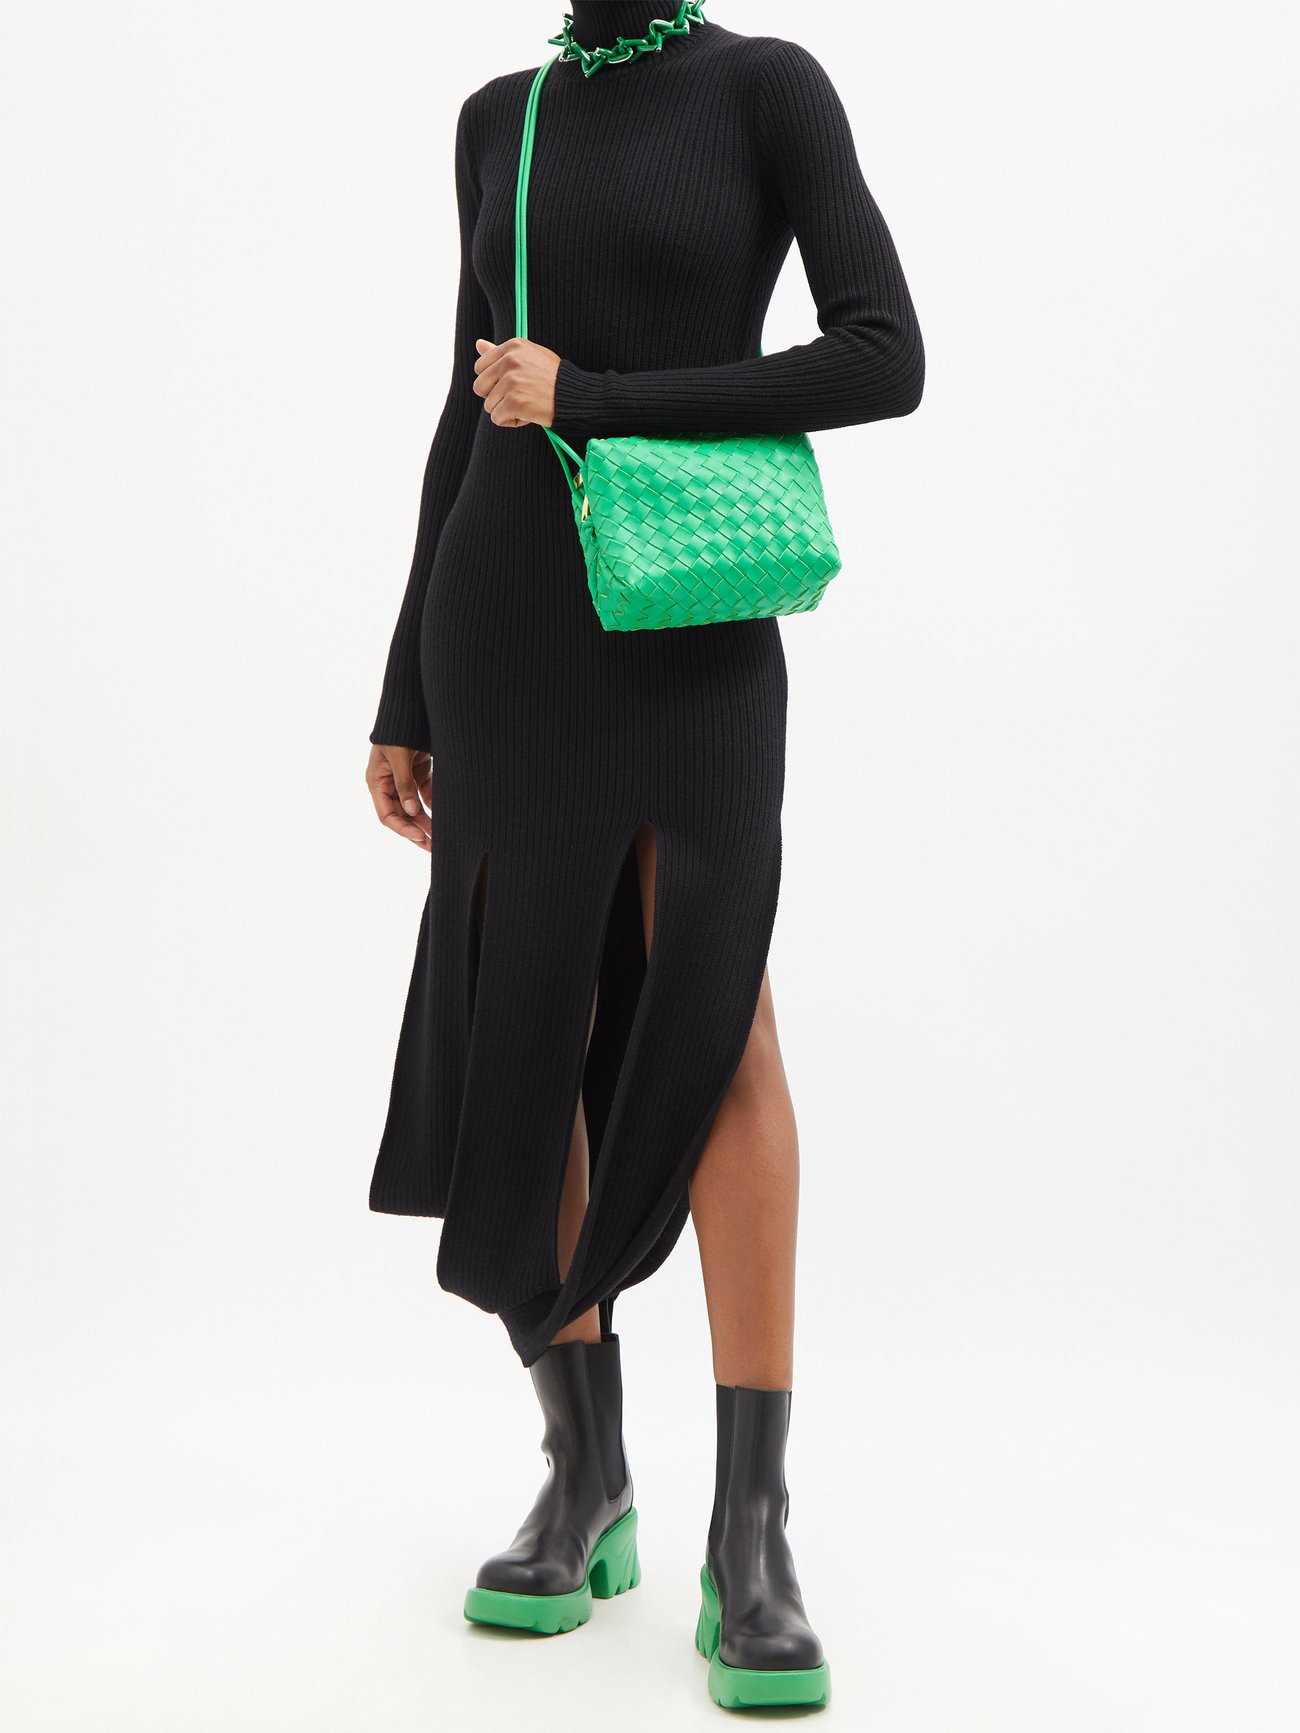 Bottega Veneta Women Loop Intrecciato Small Shoulder Bag In Green – Luosophy